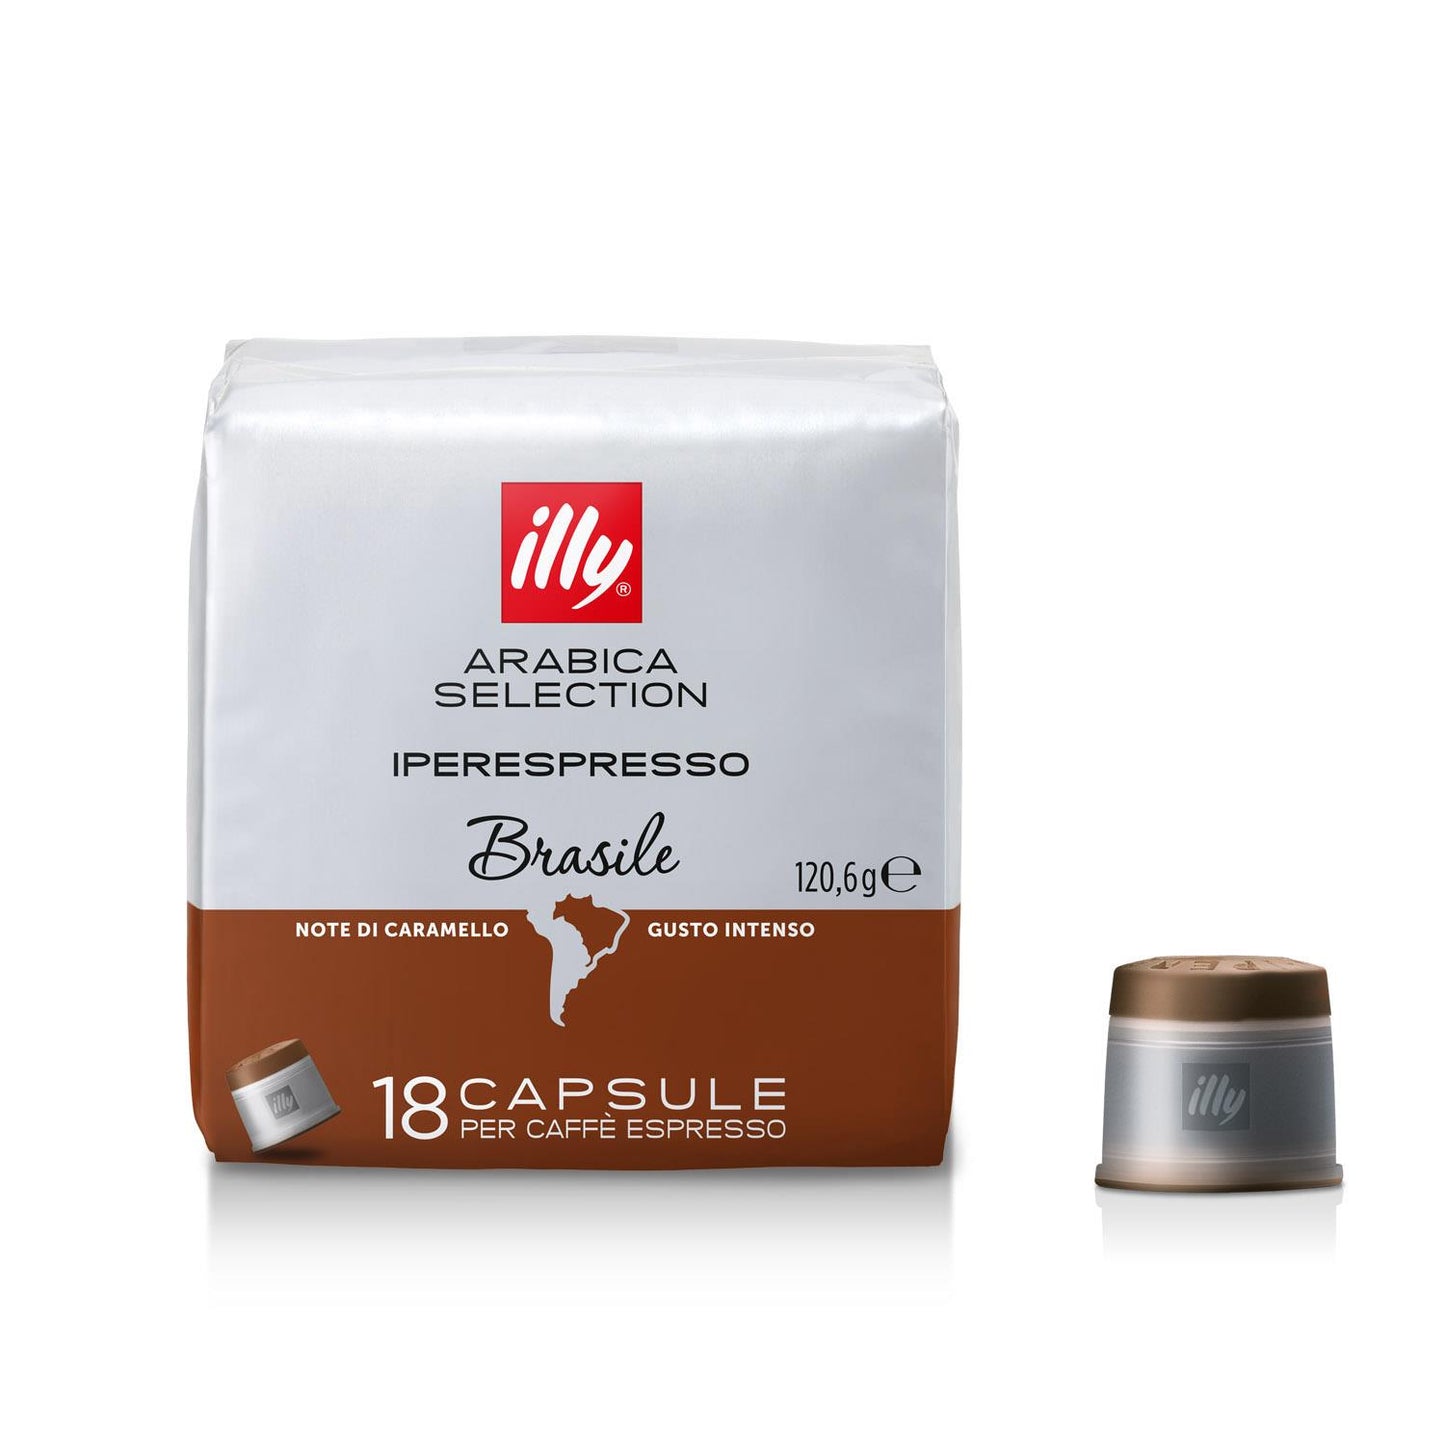 Brazilian Iperespresso Capsule Coffee (18 Pieces)